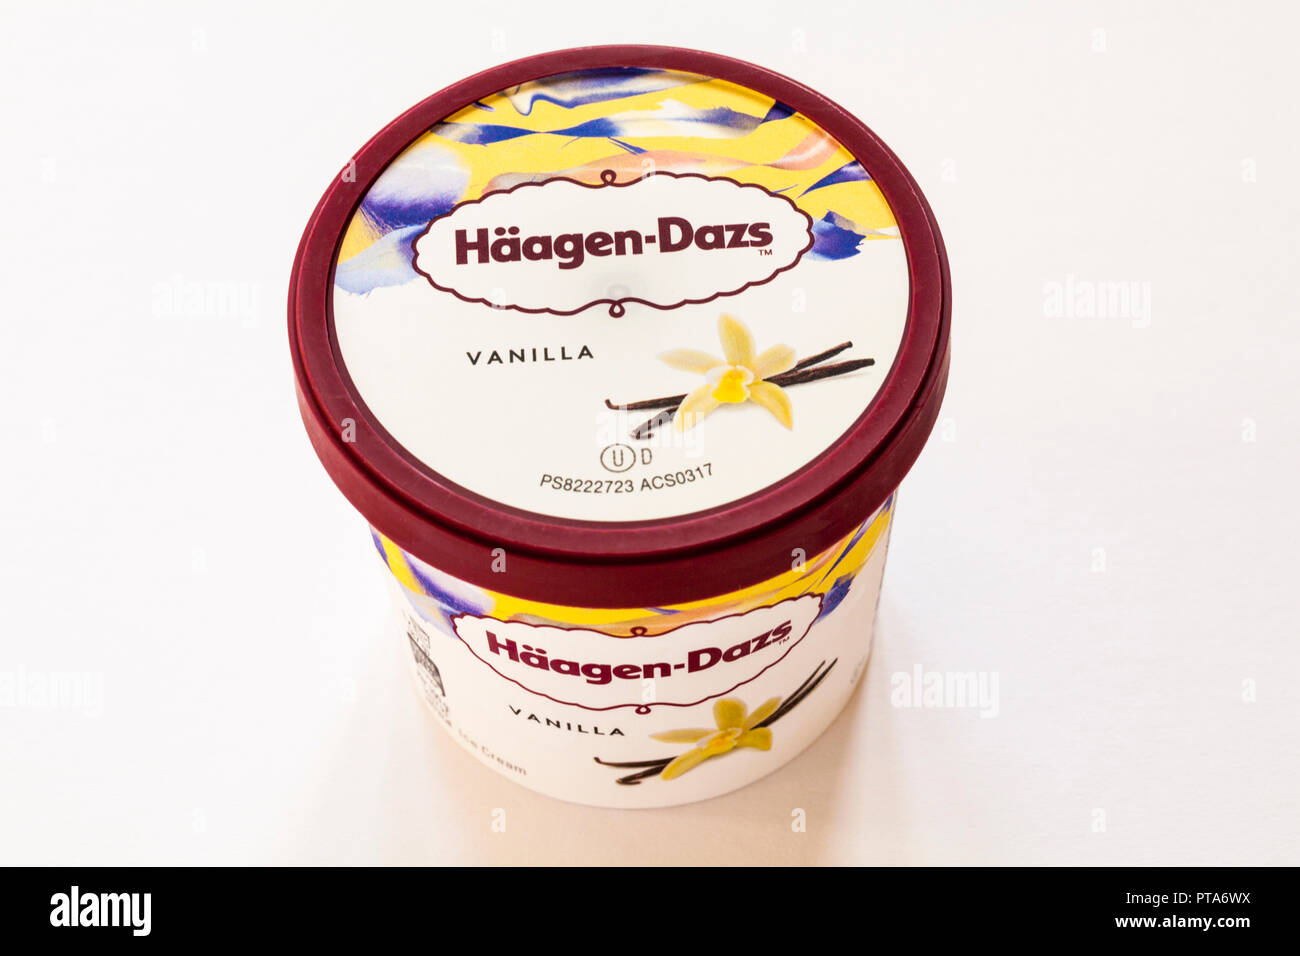 https://c8.alamy.com/comp/PTA6WX/tub-of-haagen-dazs-vanilla-ice-cream-part-of-new-vanilla-collection-mini-cups-isolated-on-white-background-PTA6WX.jpg